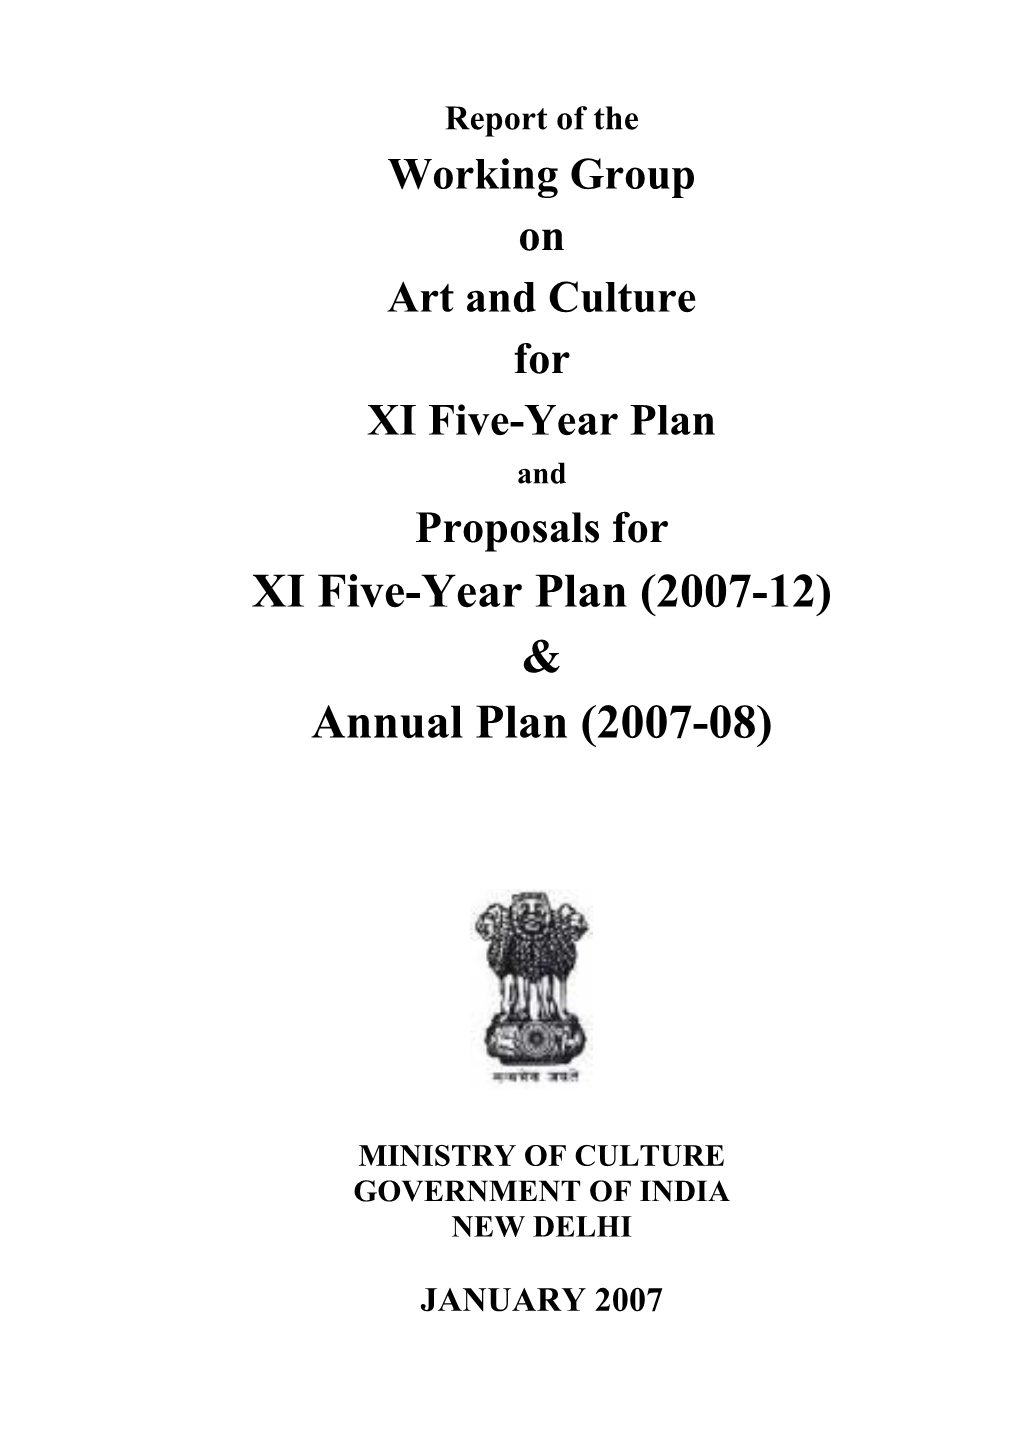 XI Five-Year Plan (2007-12) & Annual Plan (2007-08)